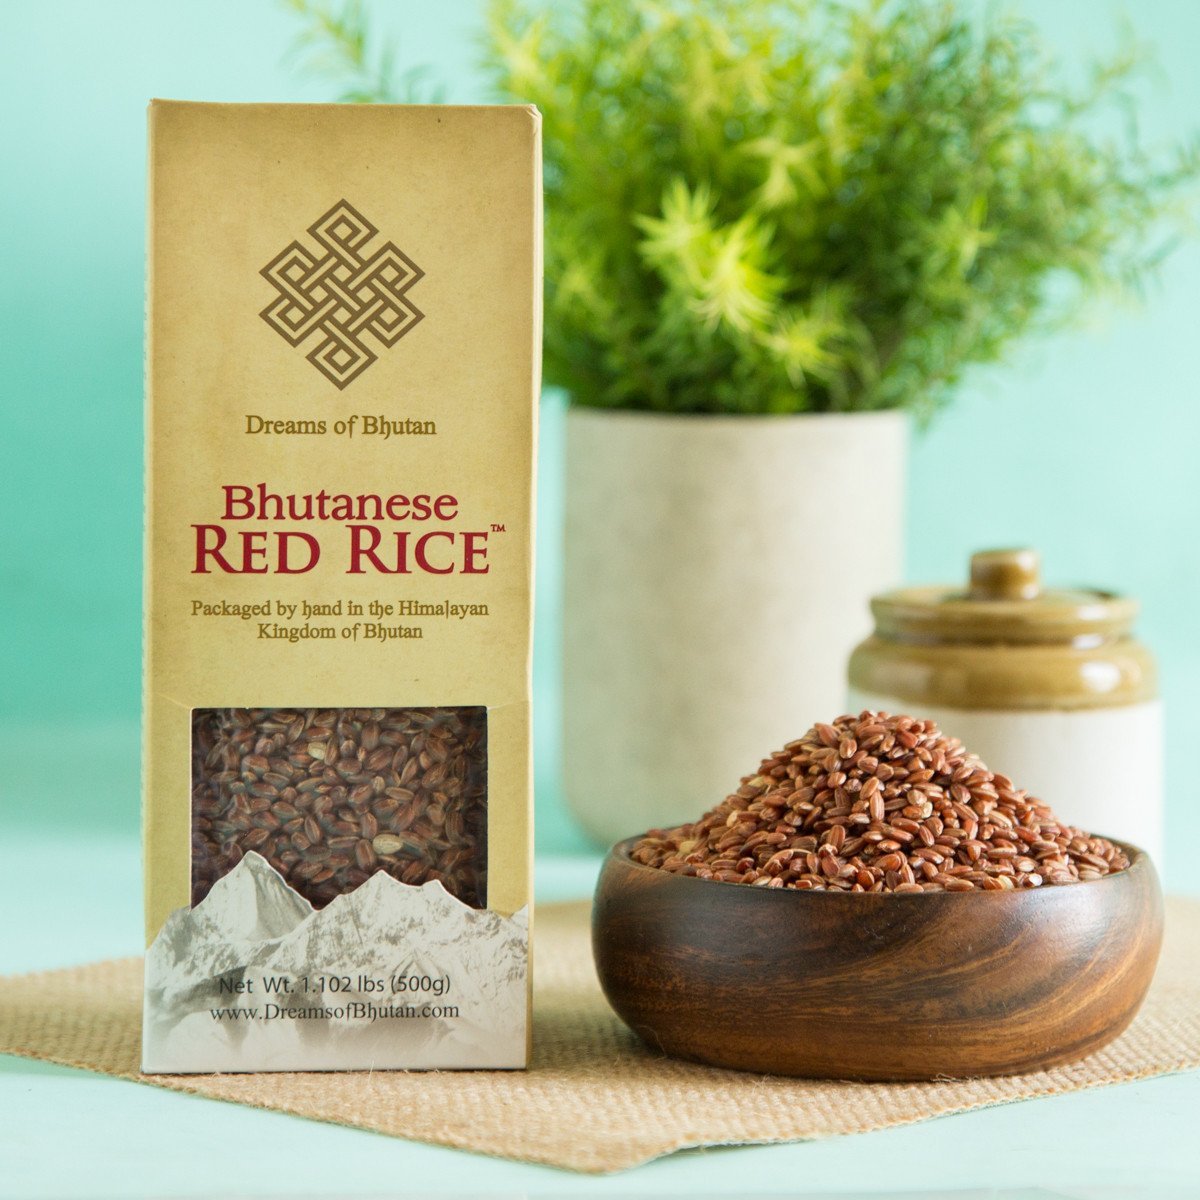 Bhutan Red Rice, 500g, Dreams of Bhutan